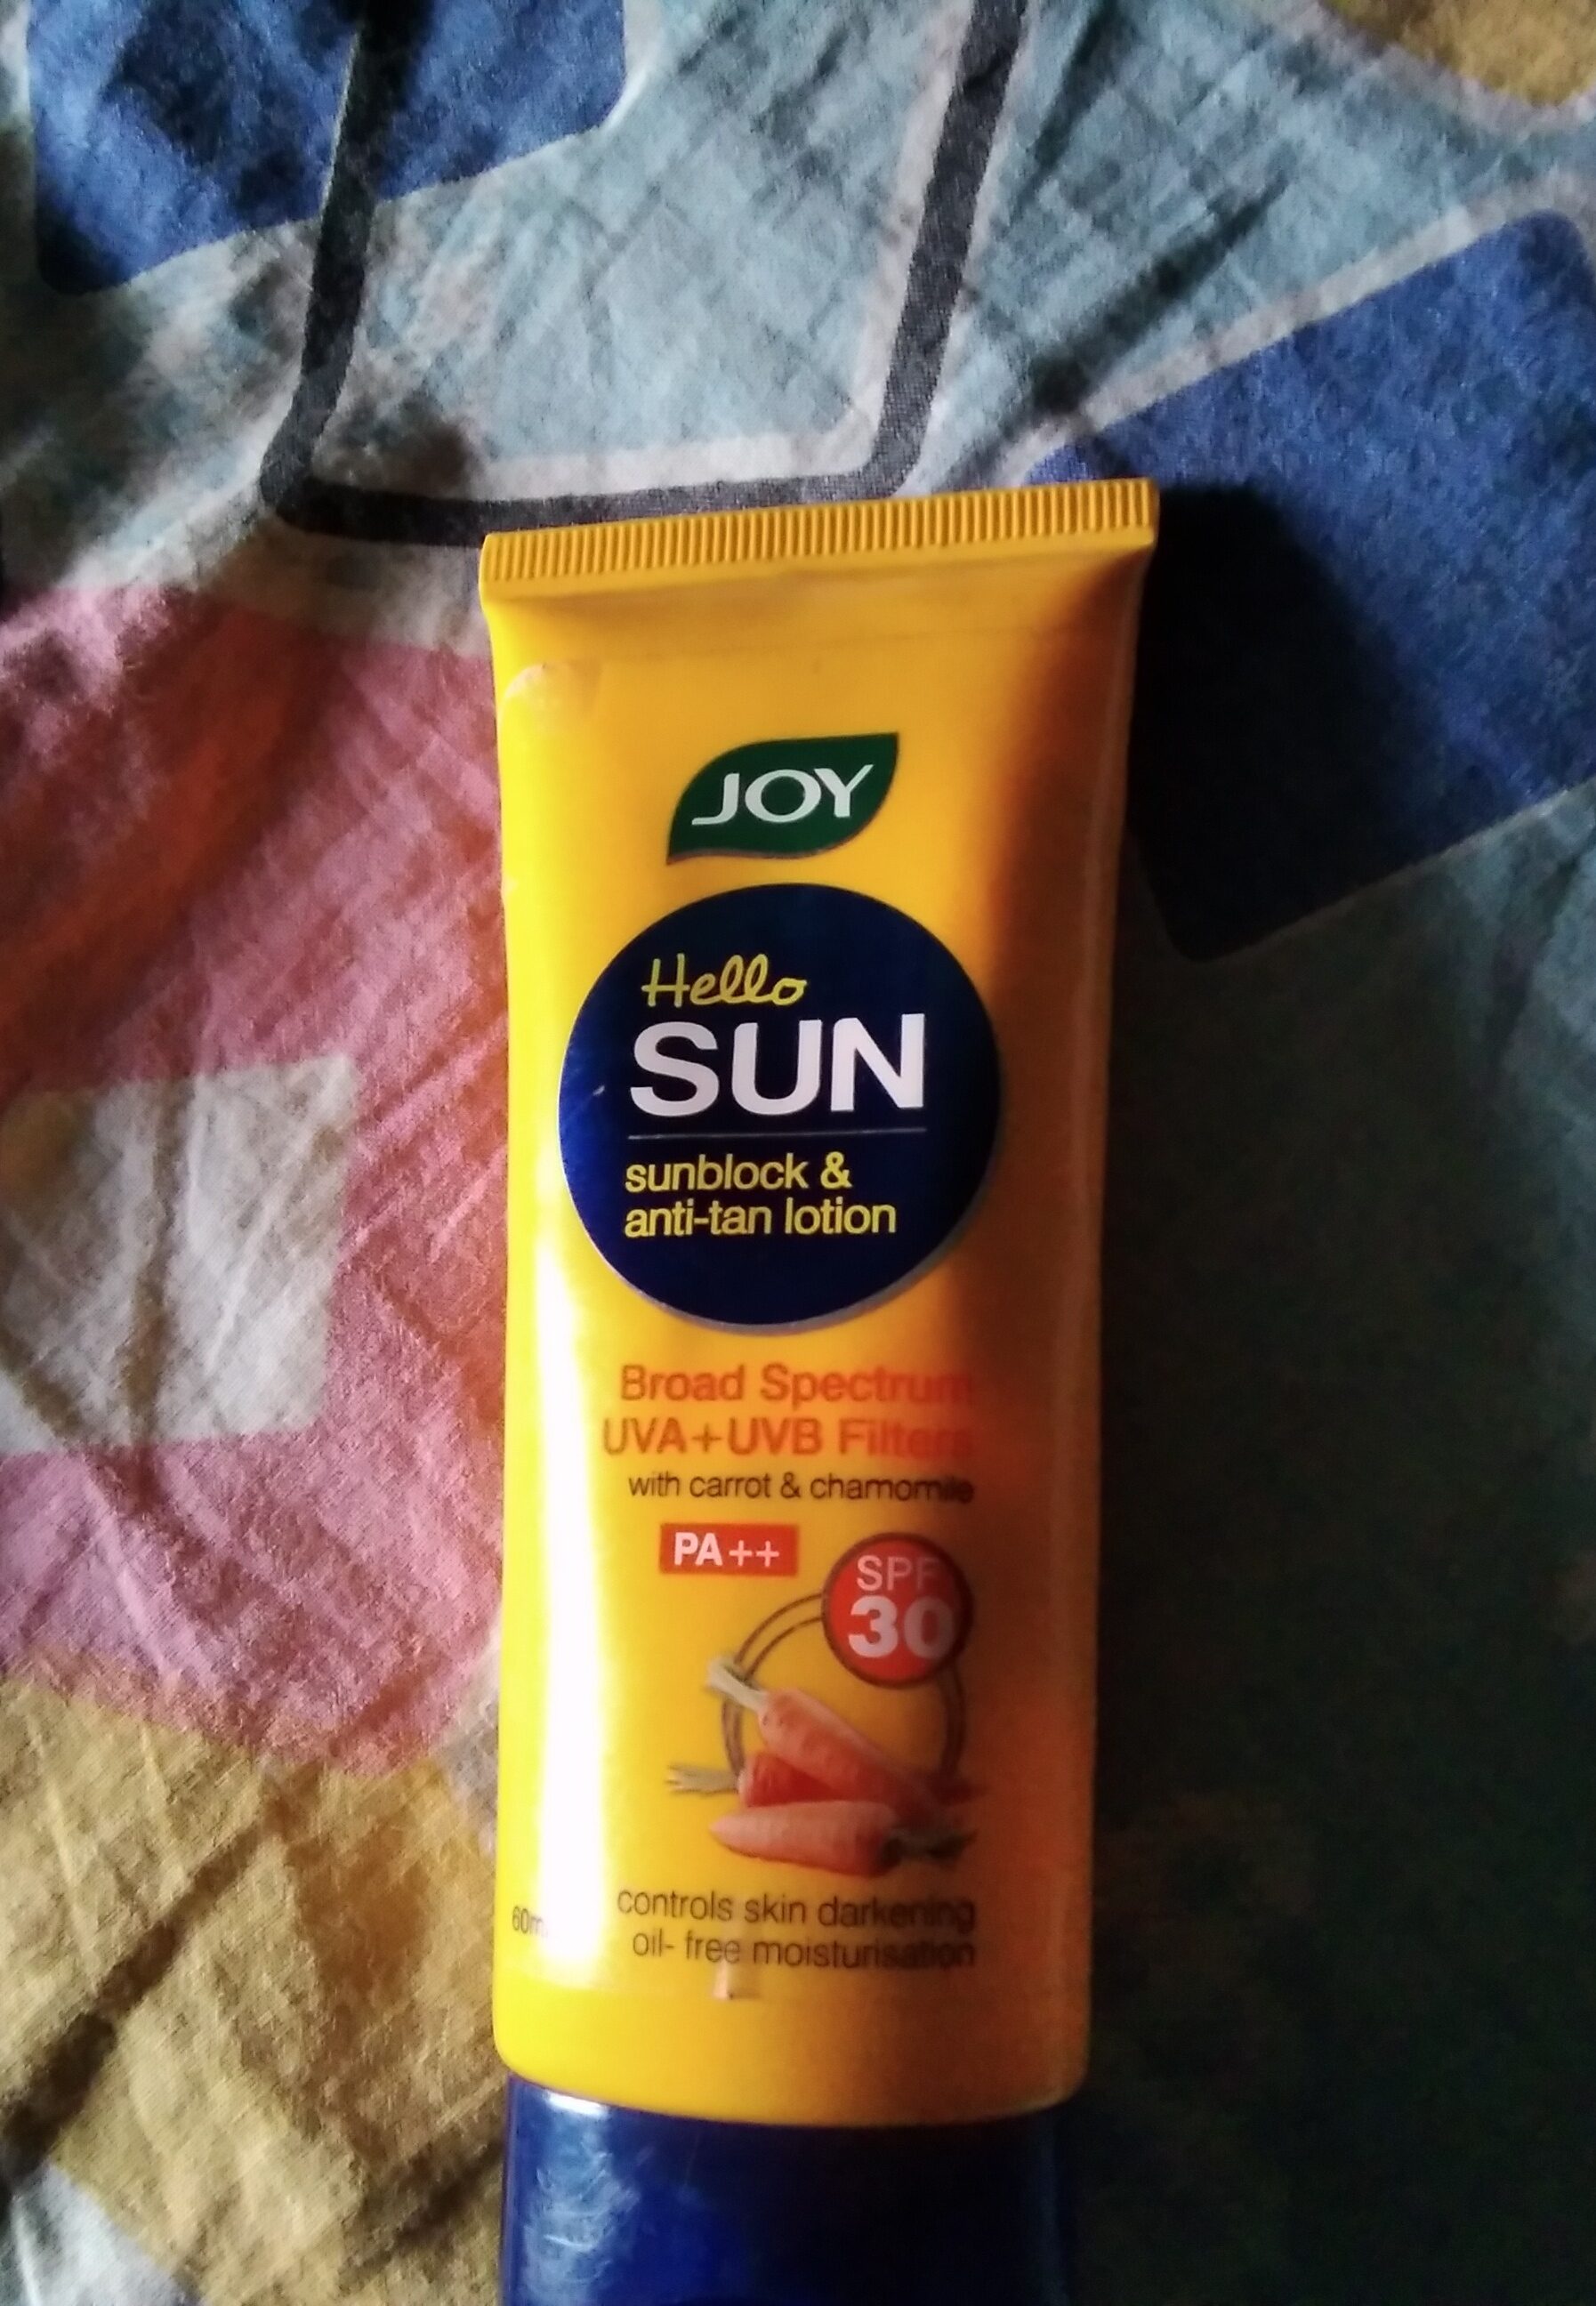 Joy Hello Sun sunblock & anti-tan loyion - Tuote - en